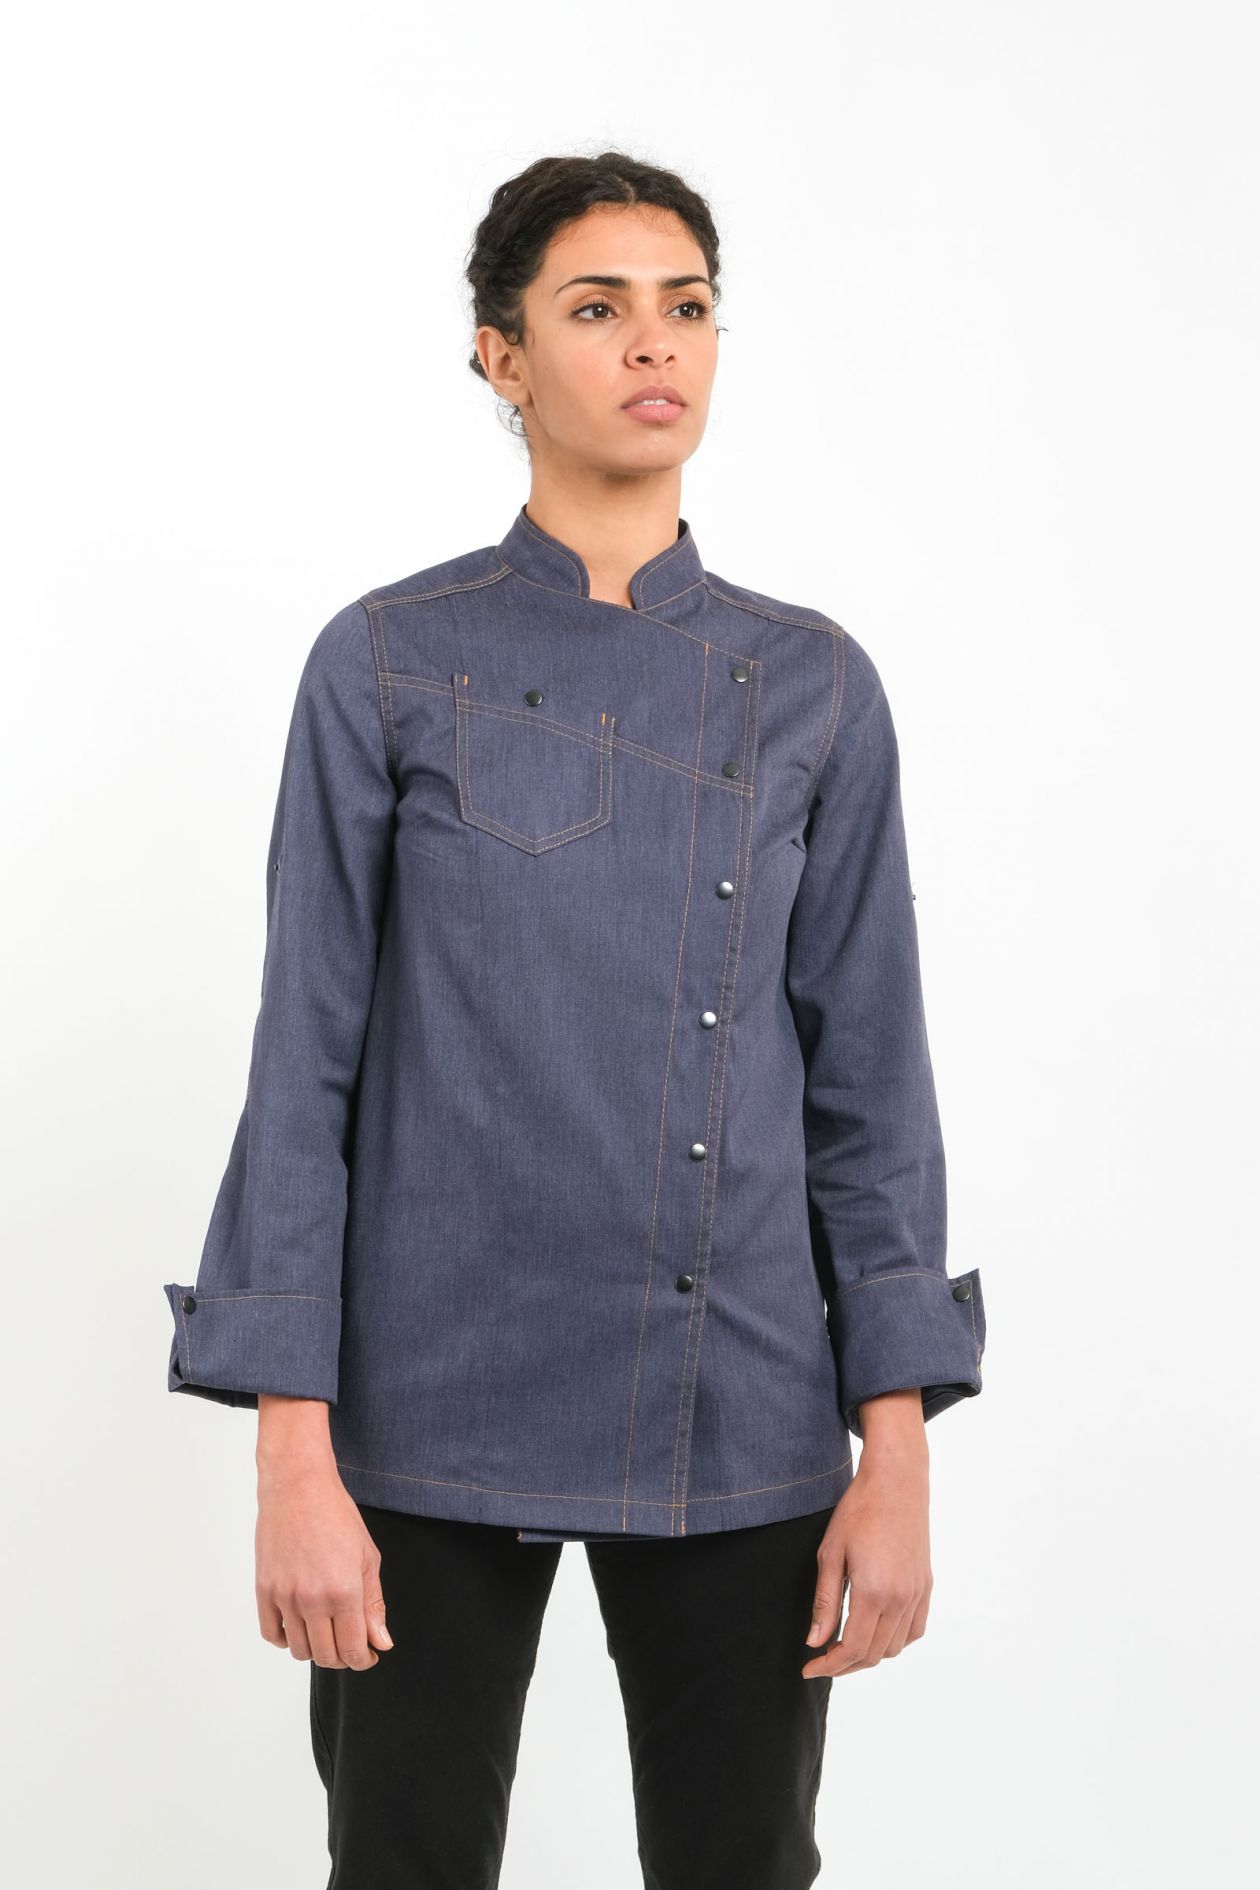 Denim chef jacket for women | BELLA jeans jacket blue | grey